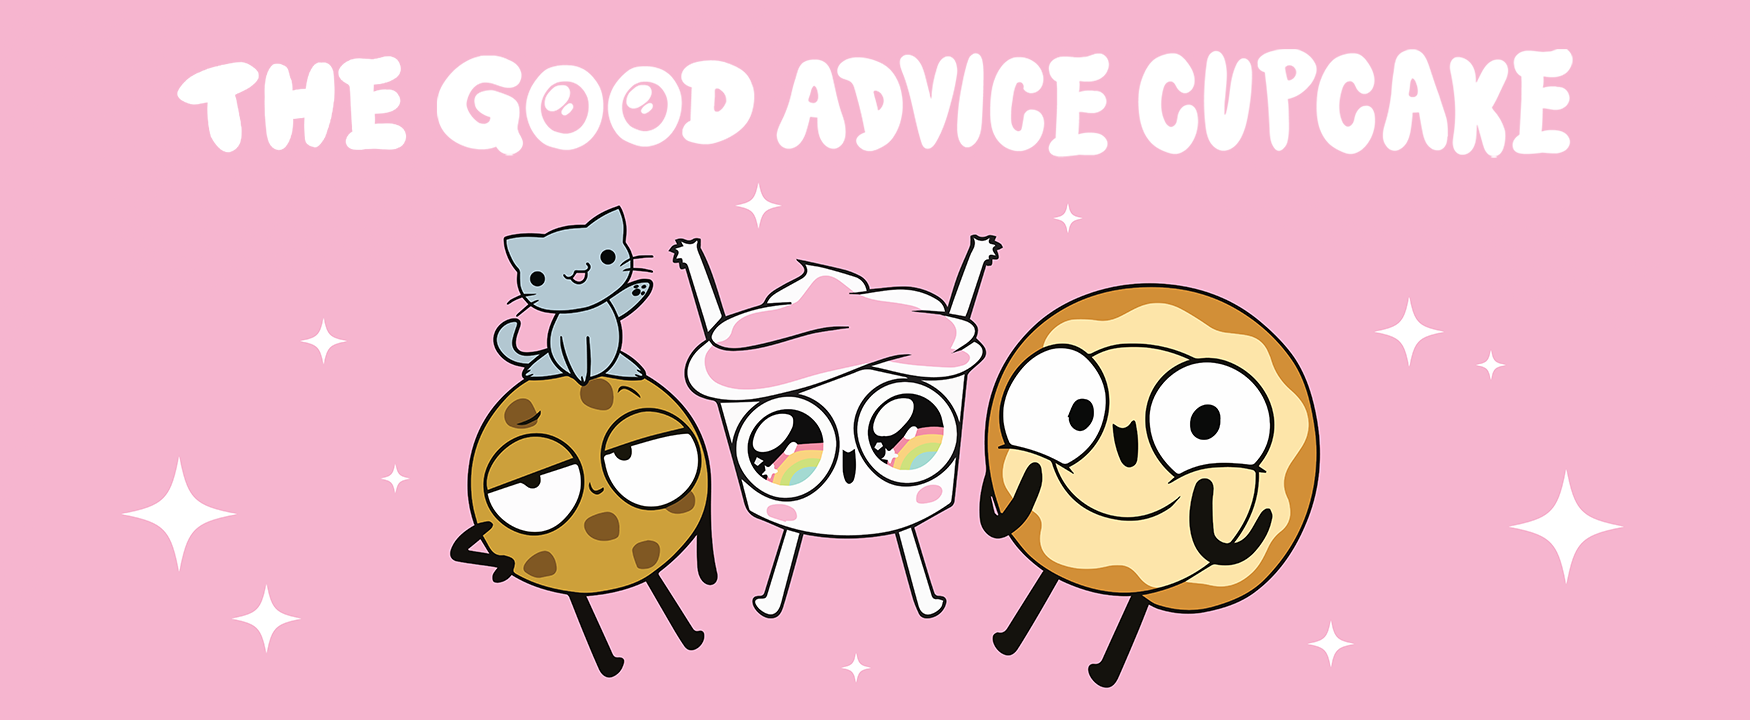 the-good-advice-cupcake-buzzfeed-animation-lab